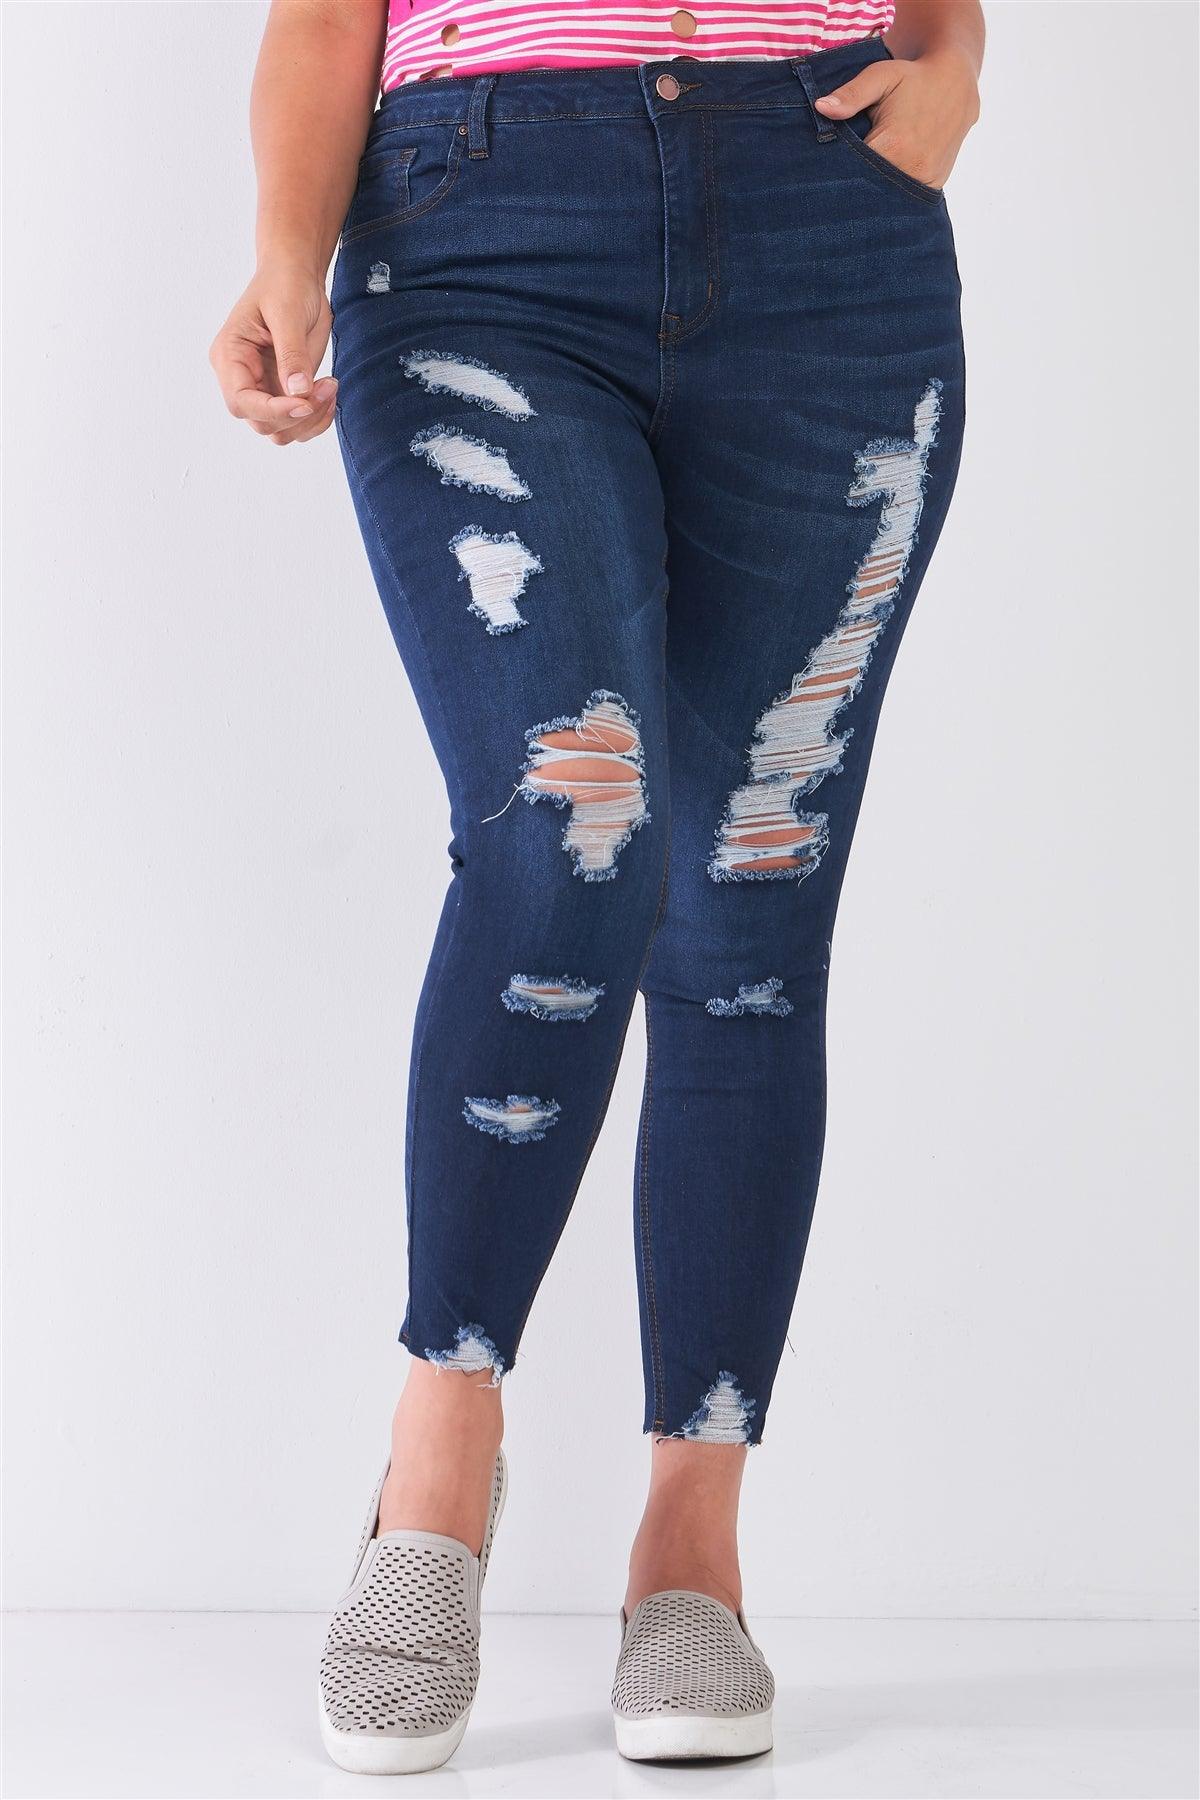 Junior Plus Size Dark Blue Denim Mid-Rise Raw Hem Detail Ripped Skinny Jean Pants